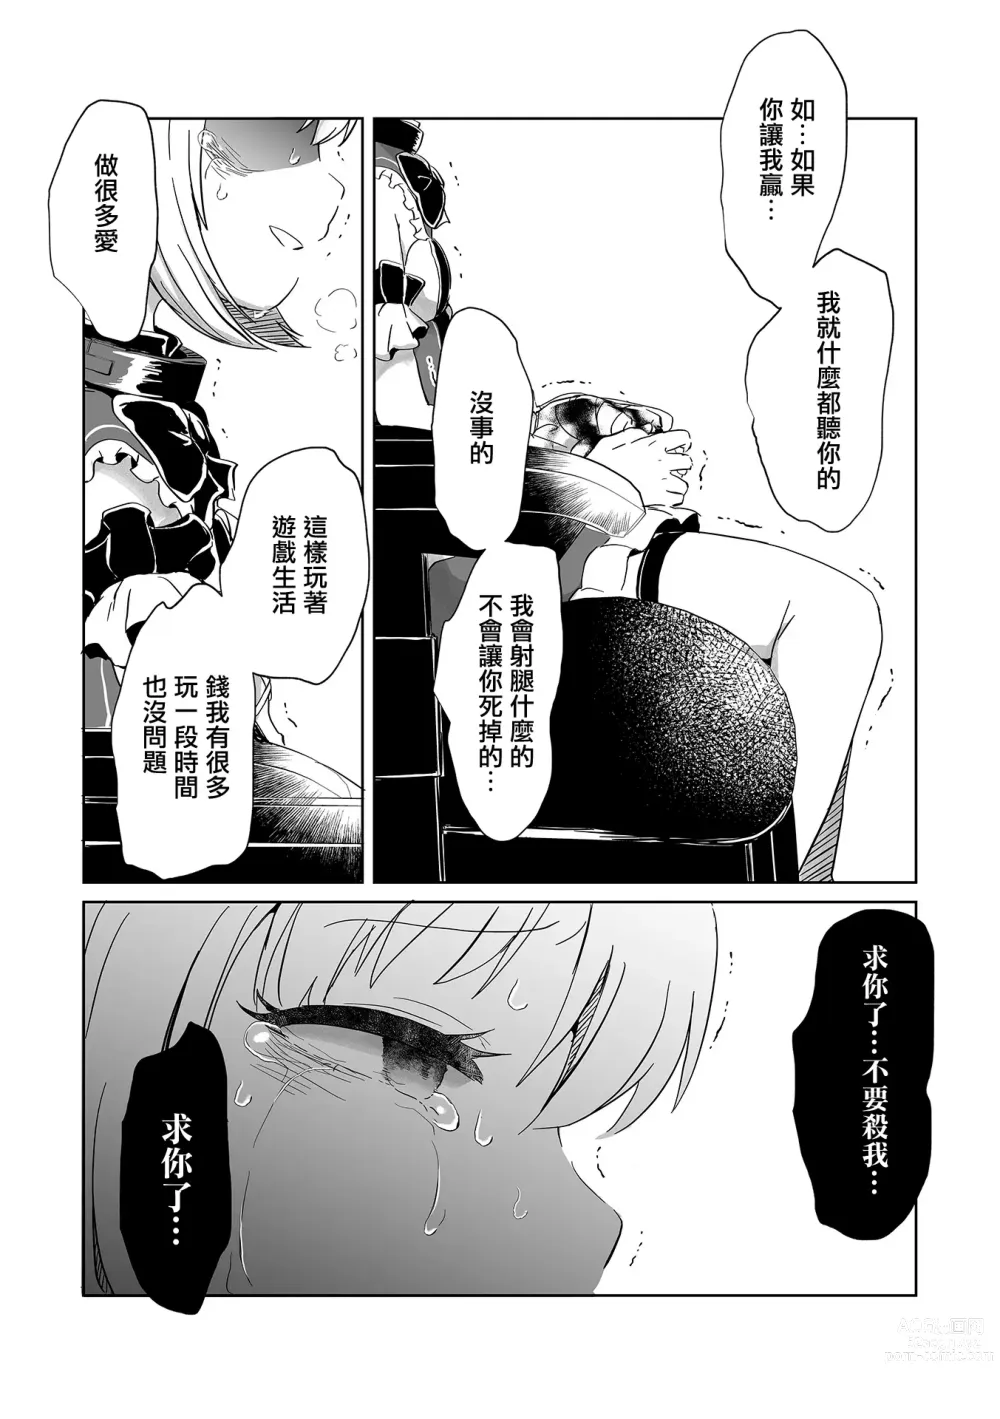 Page 22 of manga Offline Matching